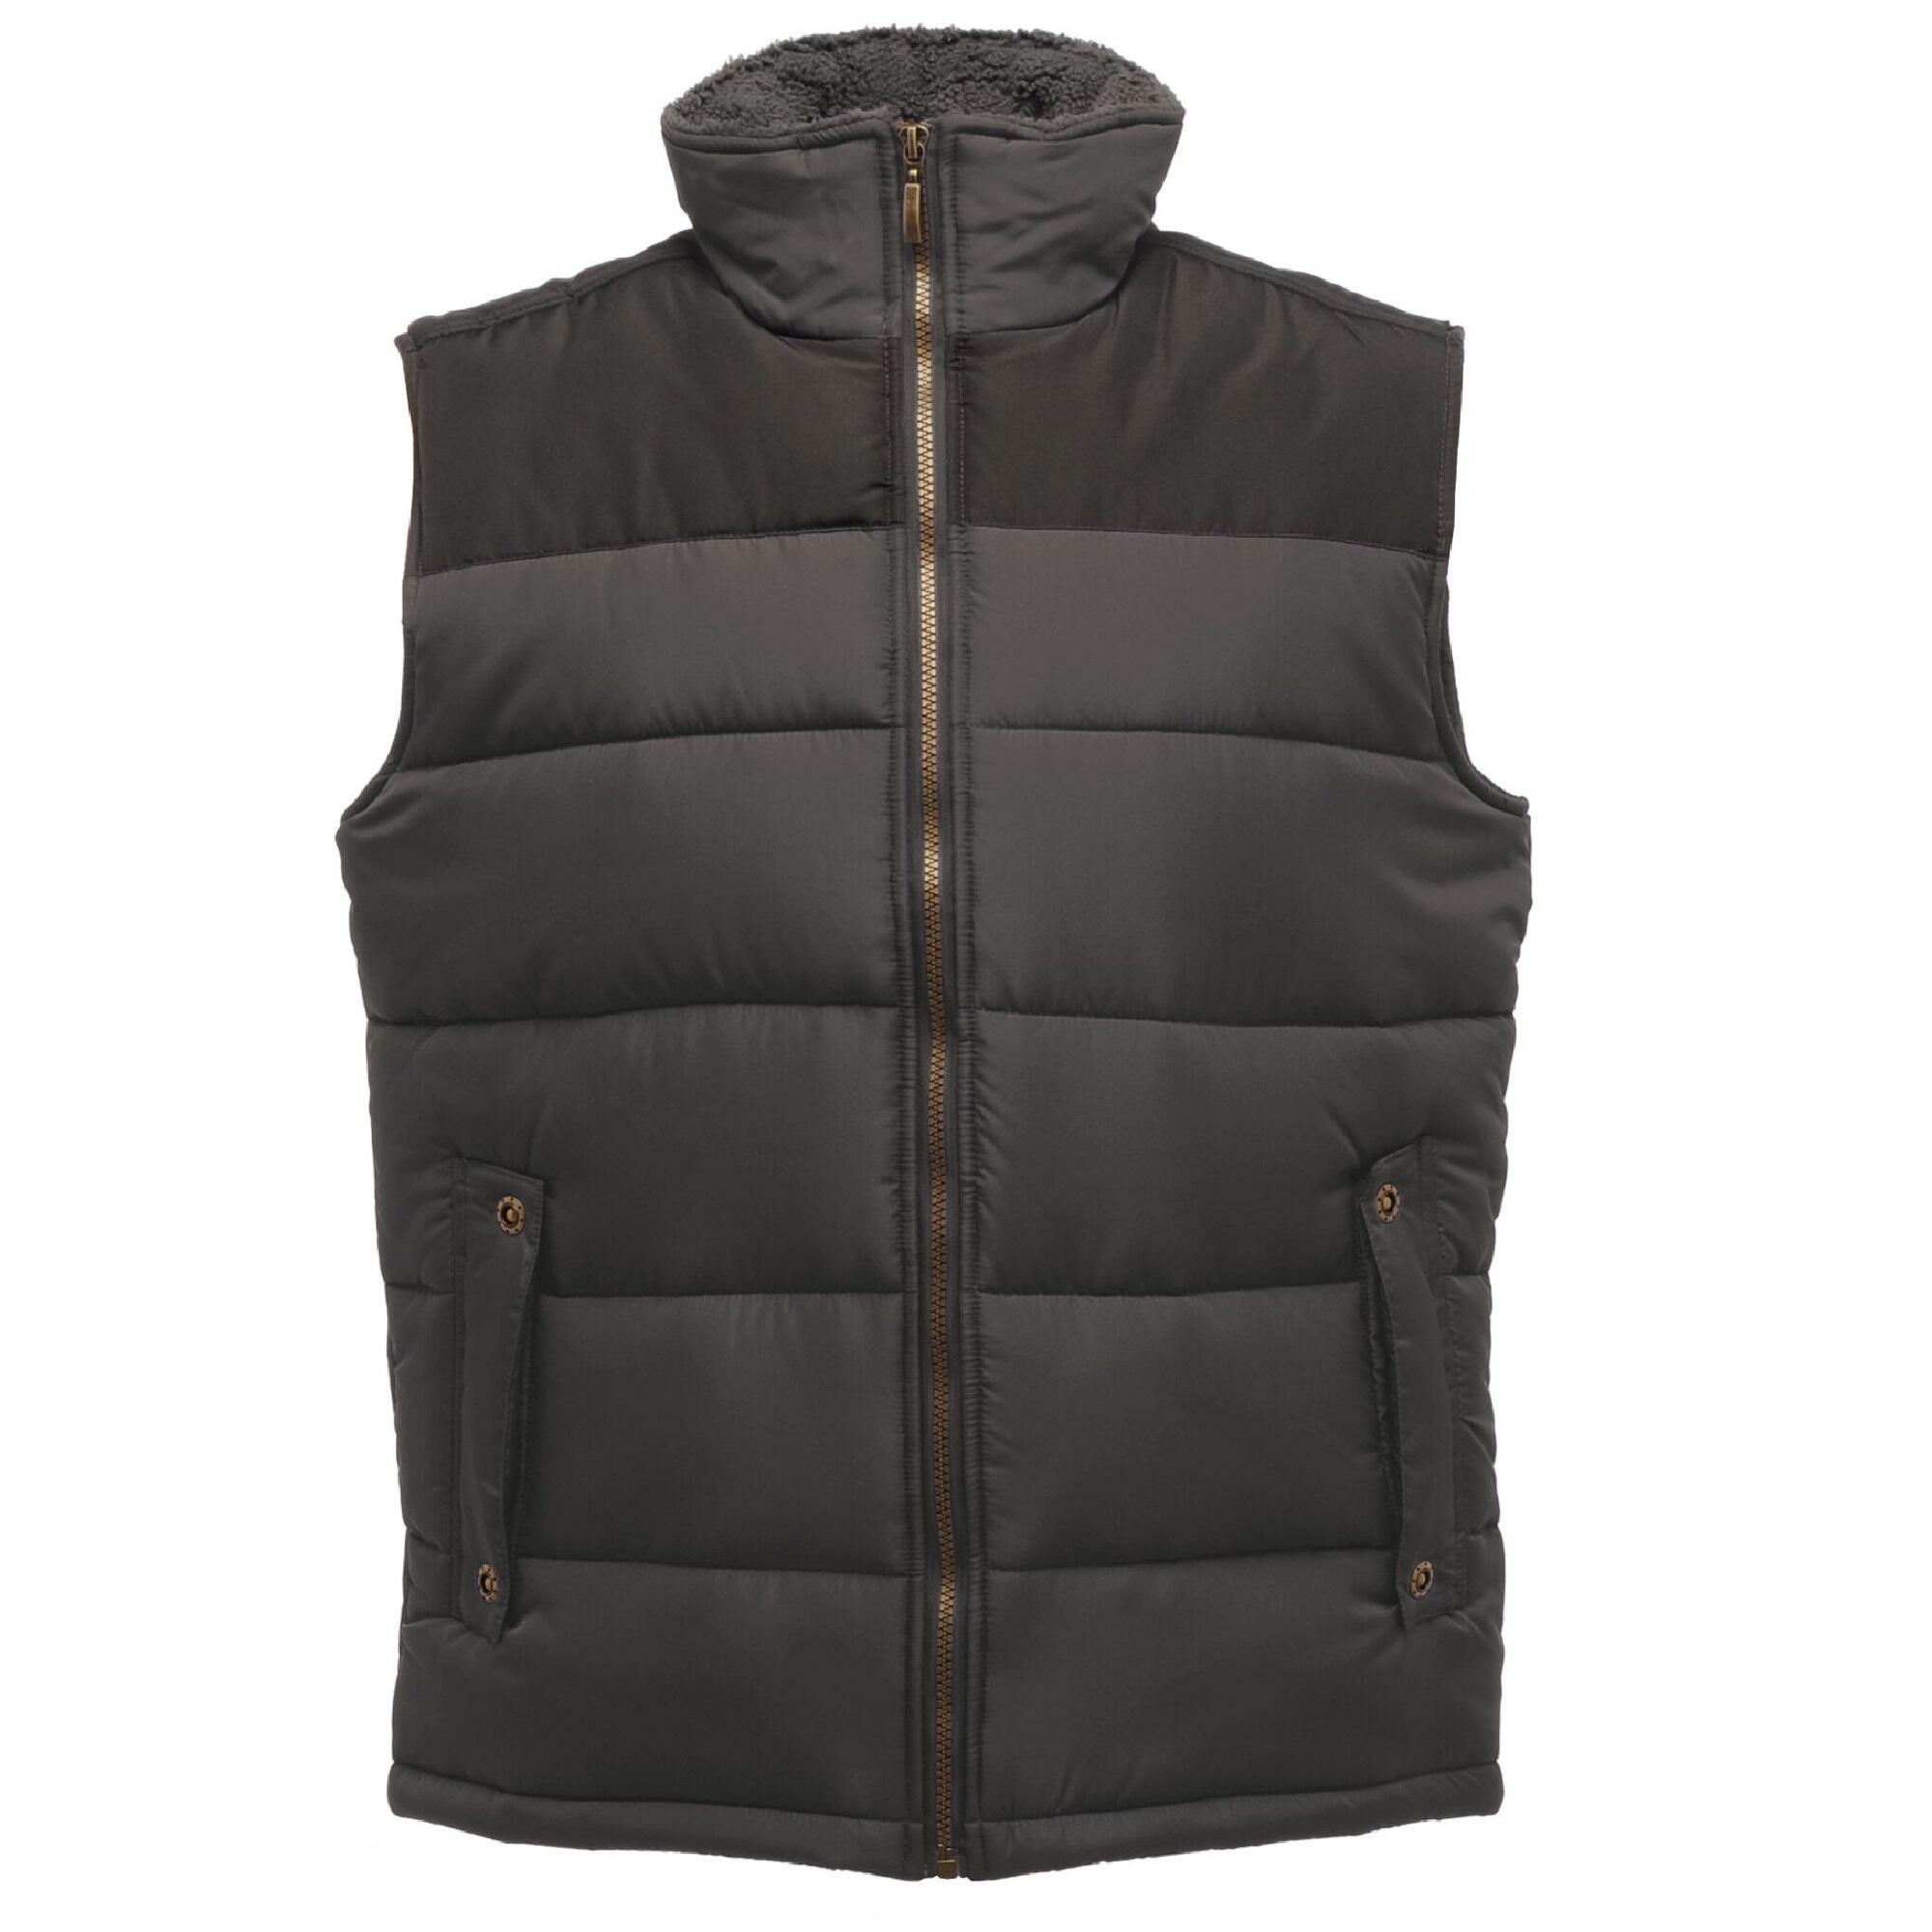 Mens Standout Altoona Insulated Bodywarmer Jacket (Seal Grey/Black) 1/4